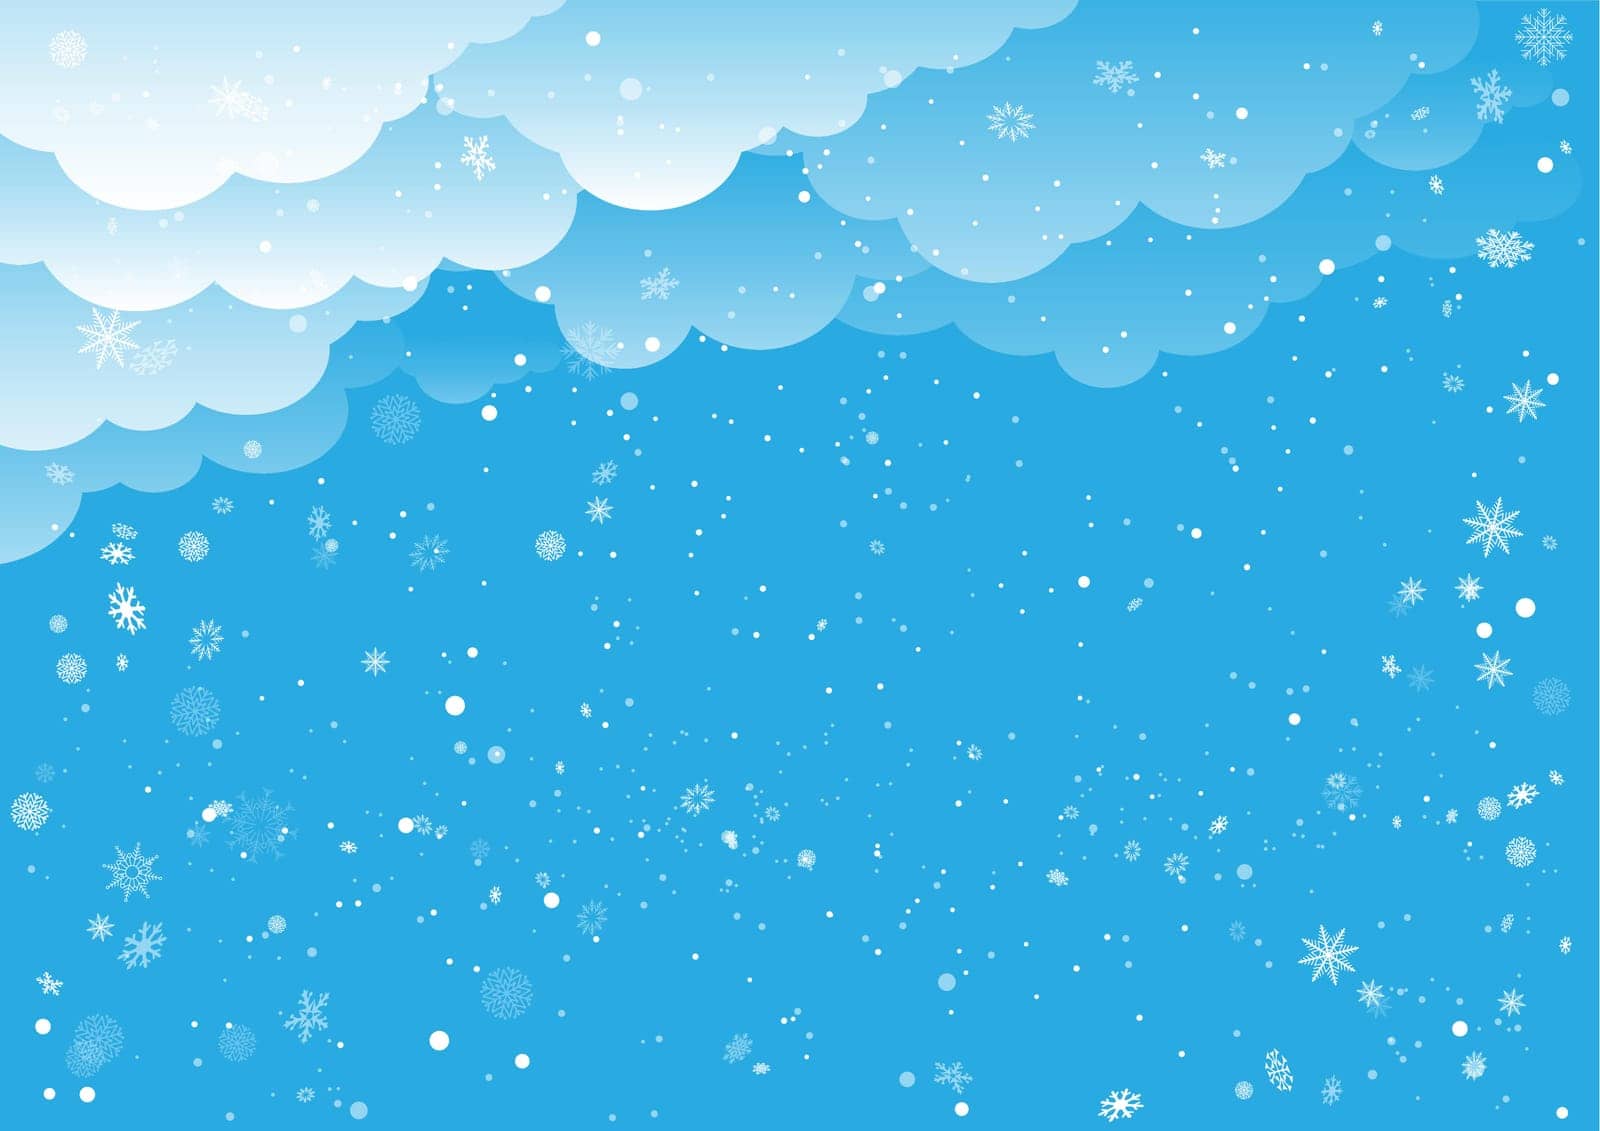 Christmas winter snowfall with sky clouds in corner. Holiday snowfall season blue background. Seasonal winter decoration backdrop